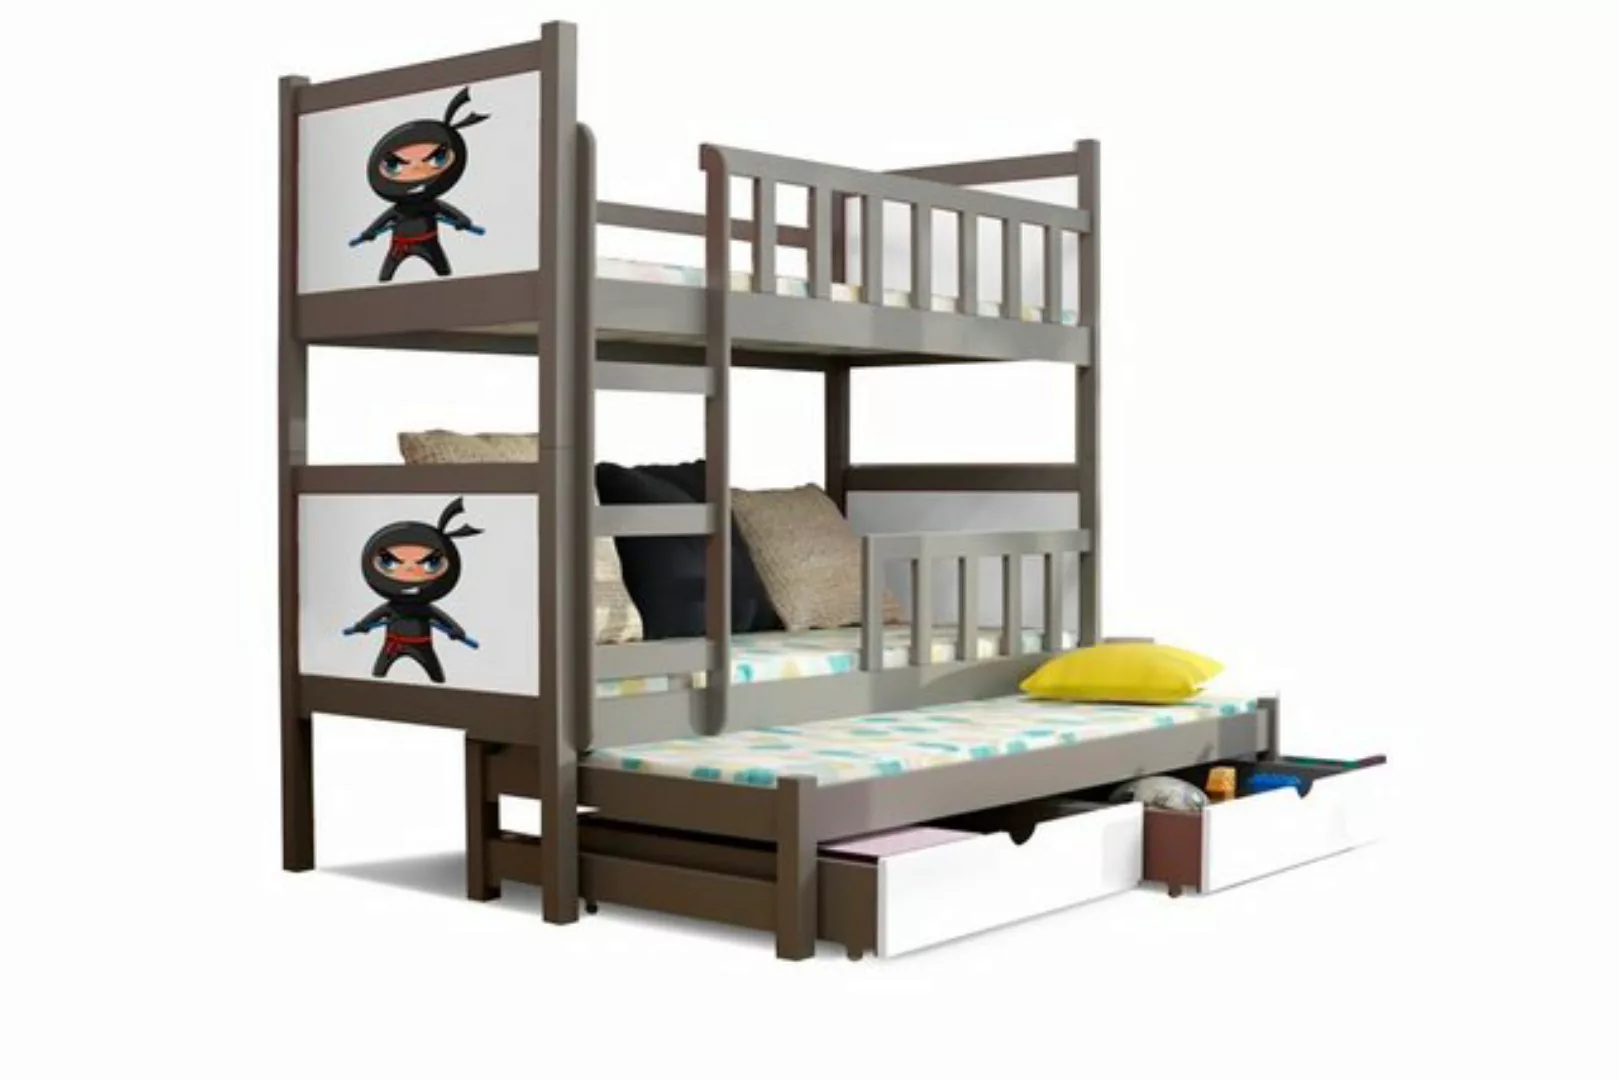 99rooms Kinderbett Zoo II (Kinderbett, Bett), 190x80 cm, mit Bettkasten, Ki günstig online kaufen